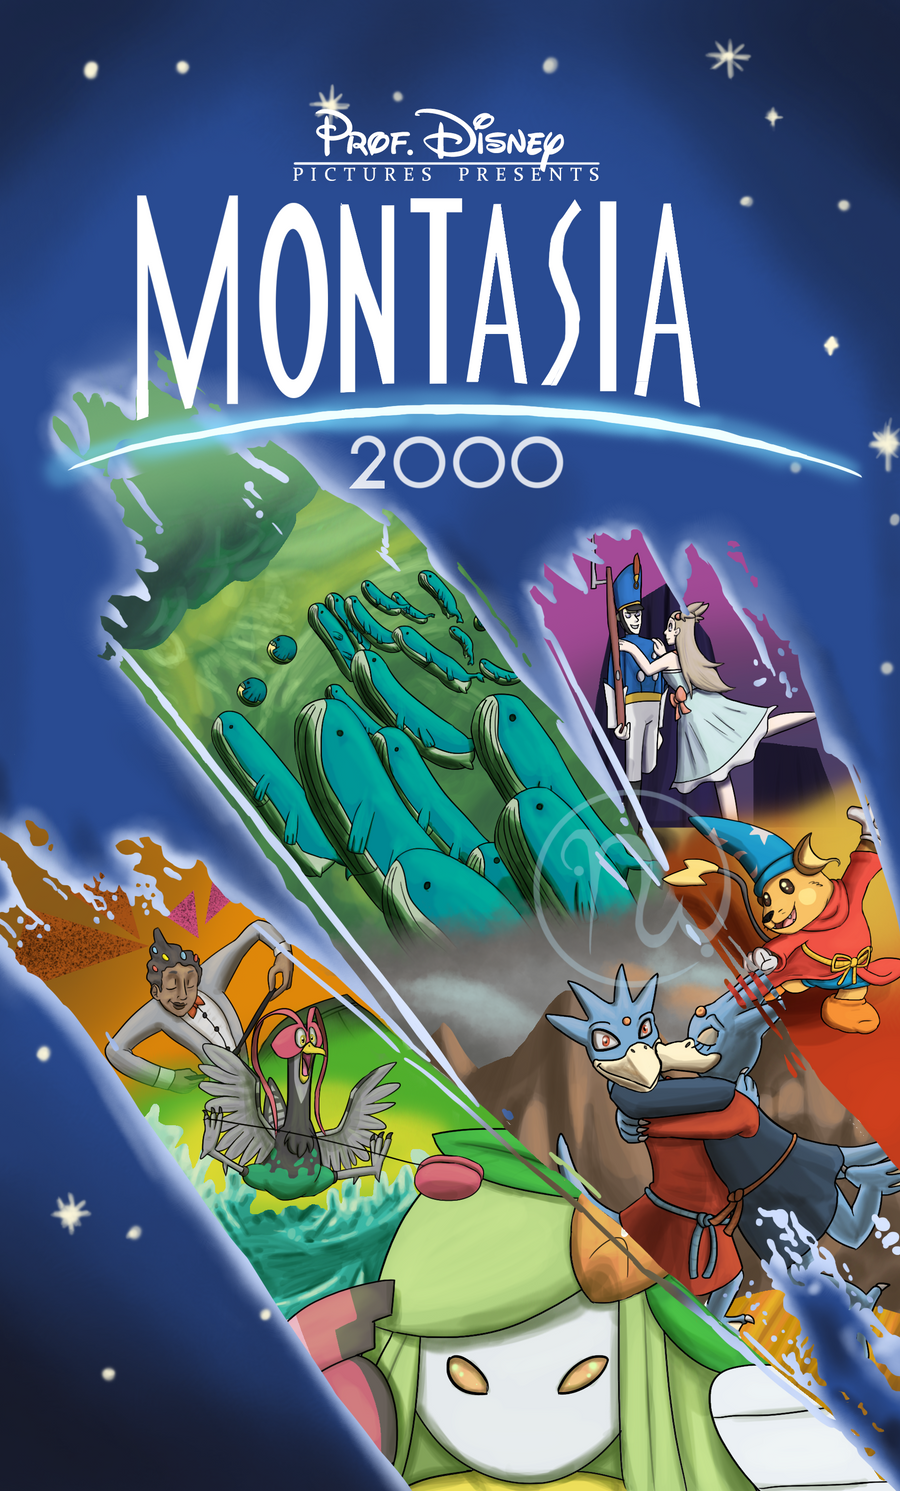 A Pokemon's Fantasia 2000 1999 by GMDay on DeviantArt